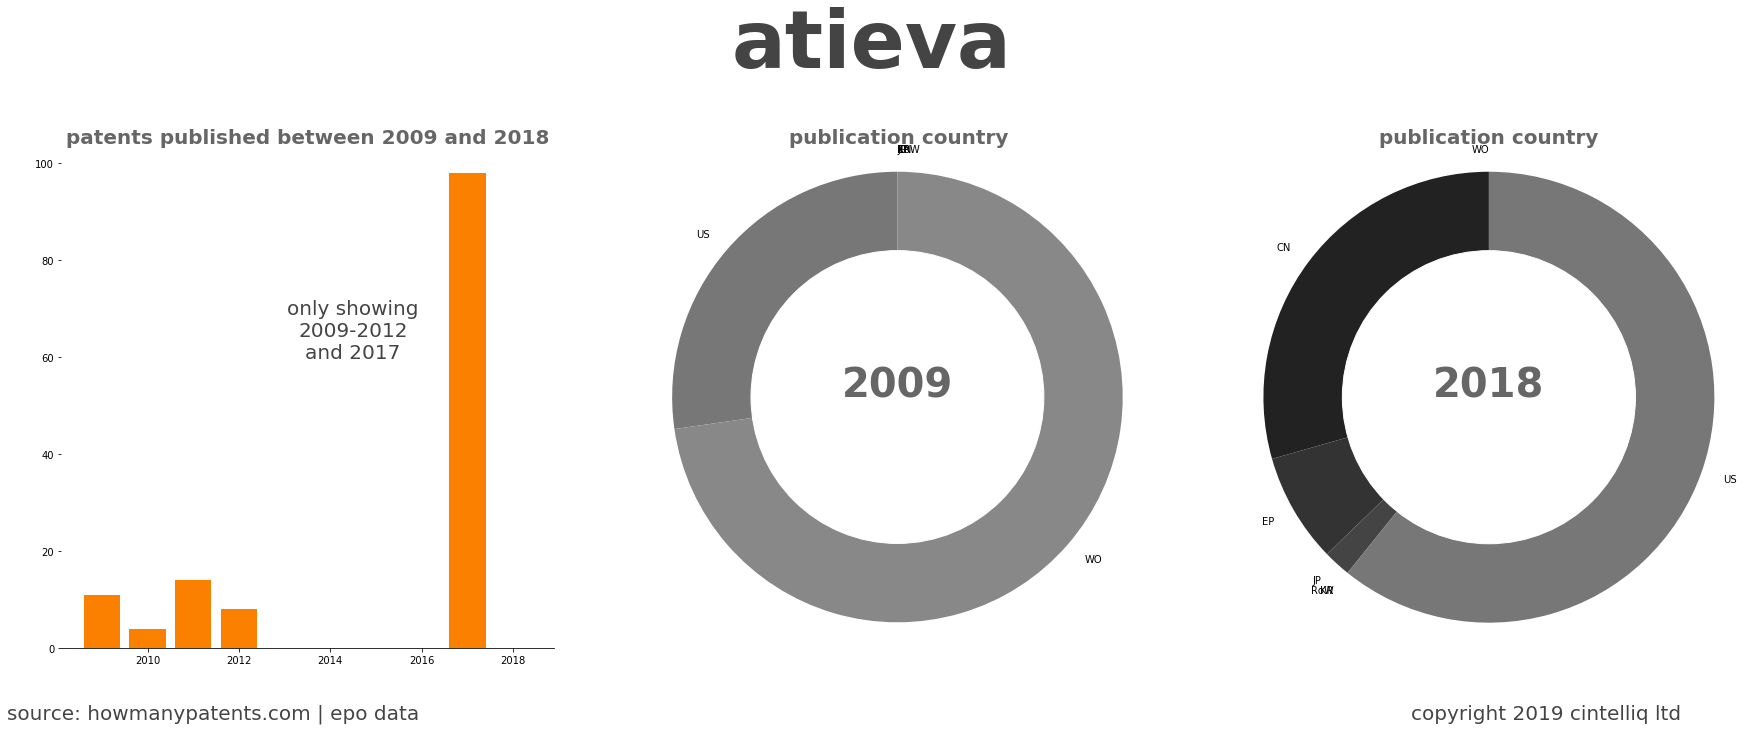 summary of patents for Atieva